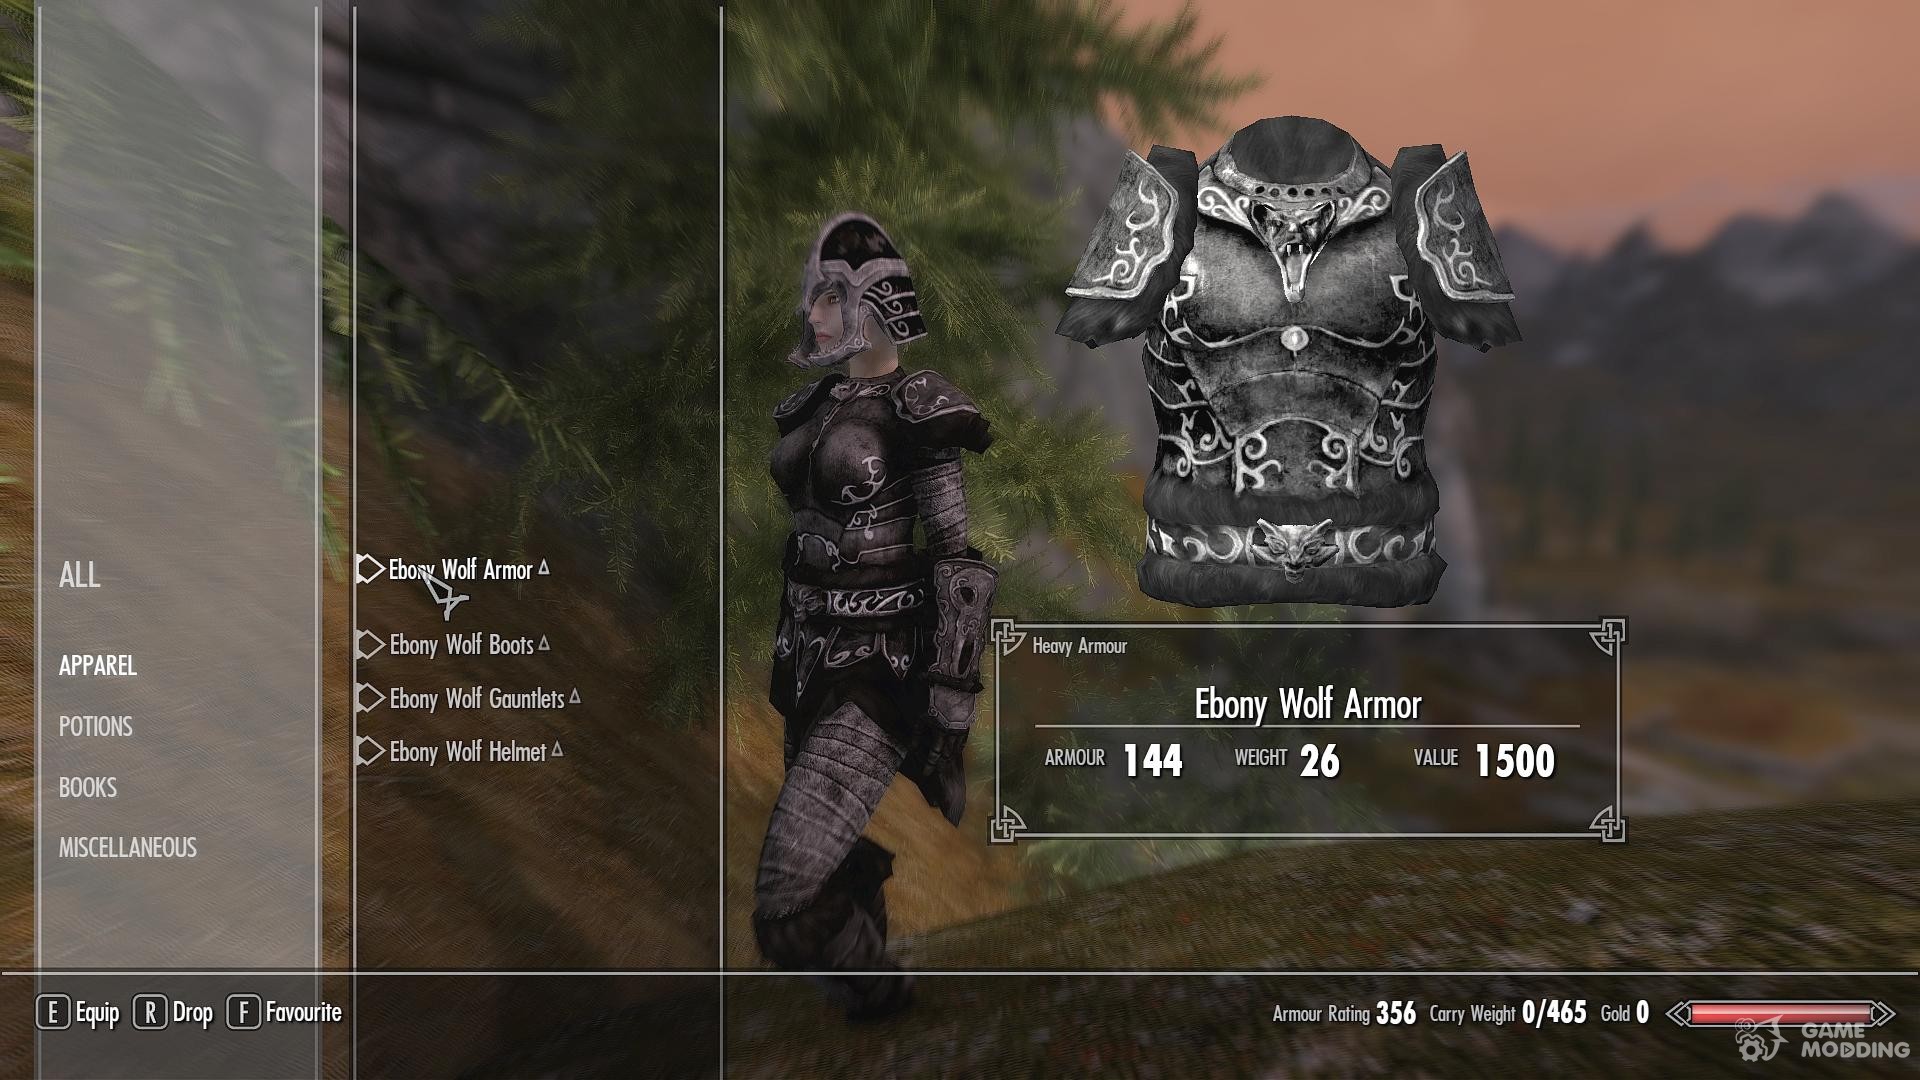 Ebony armor boot sskyrim id